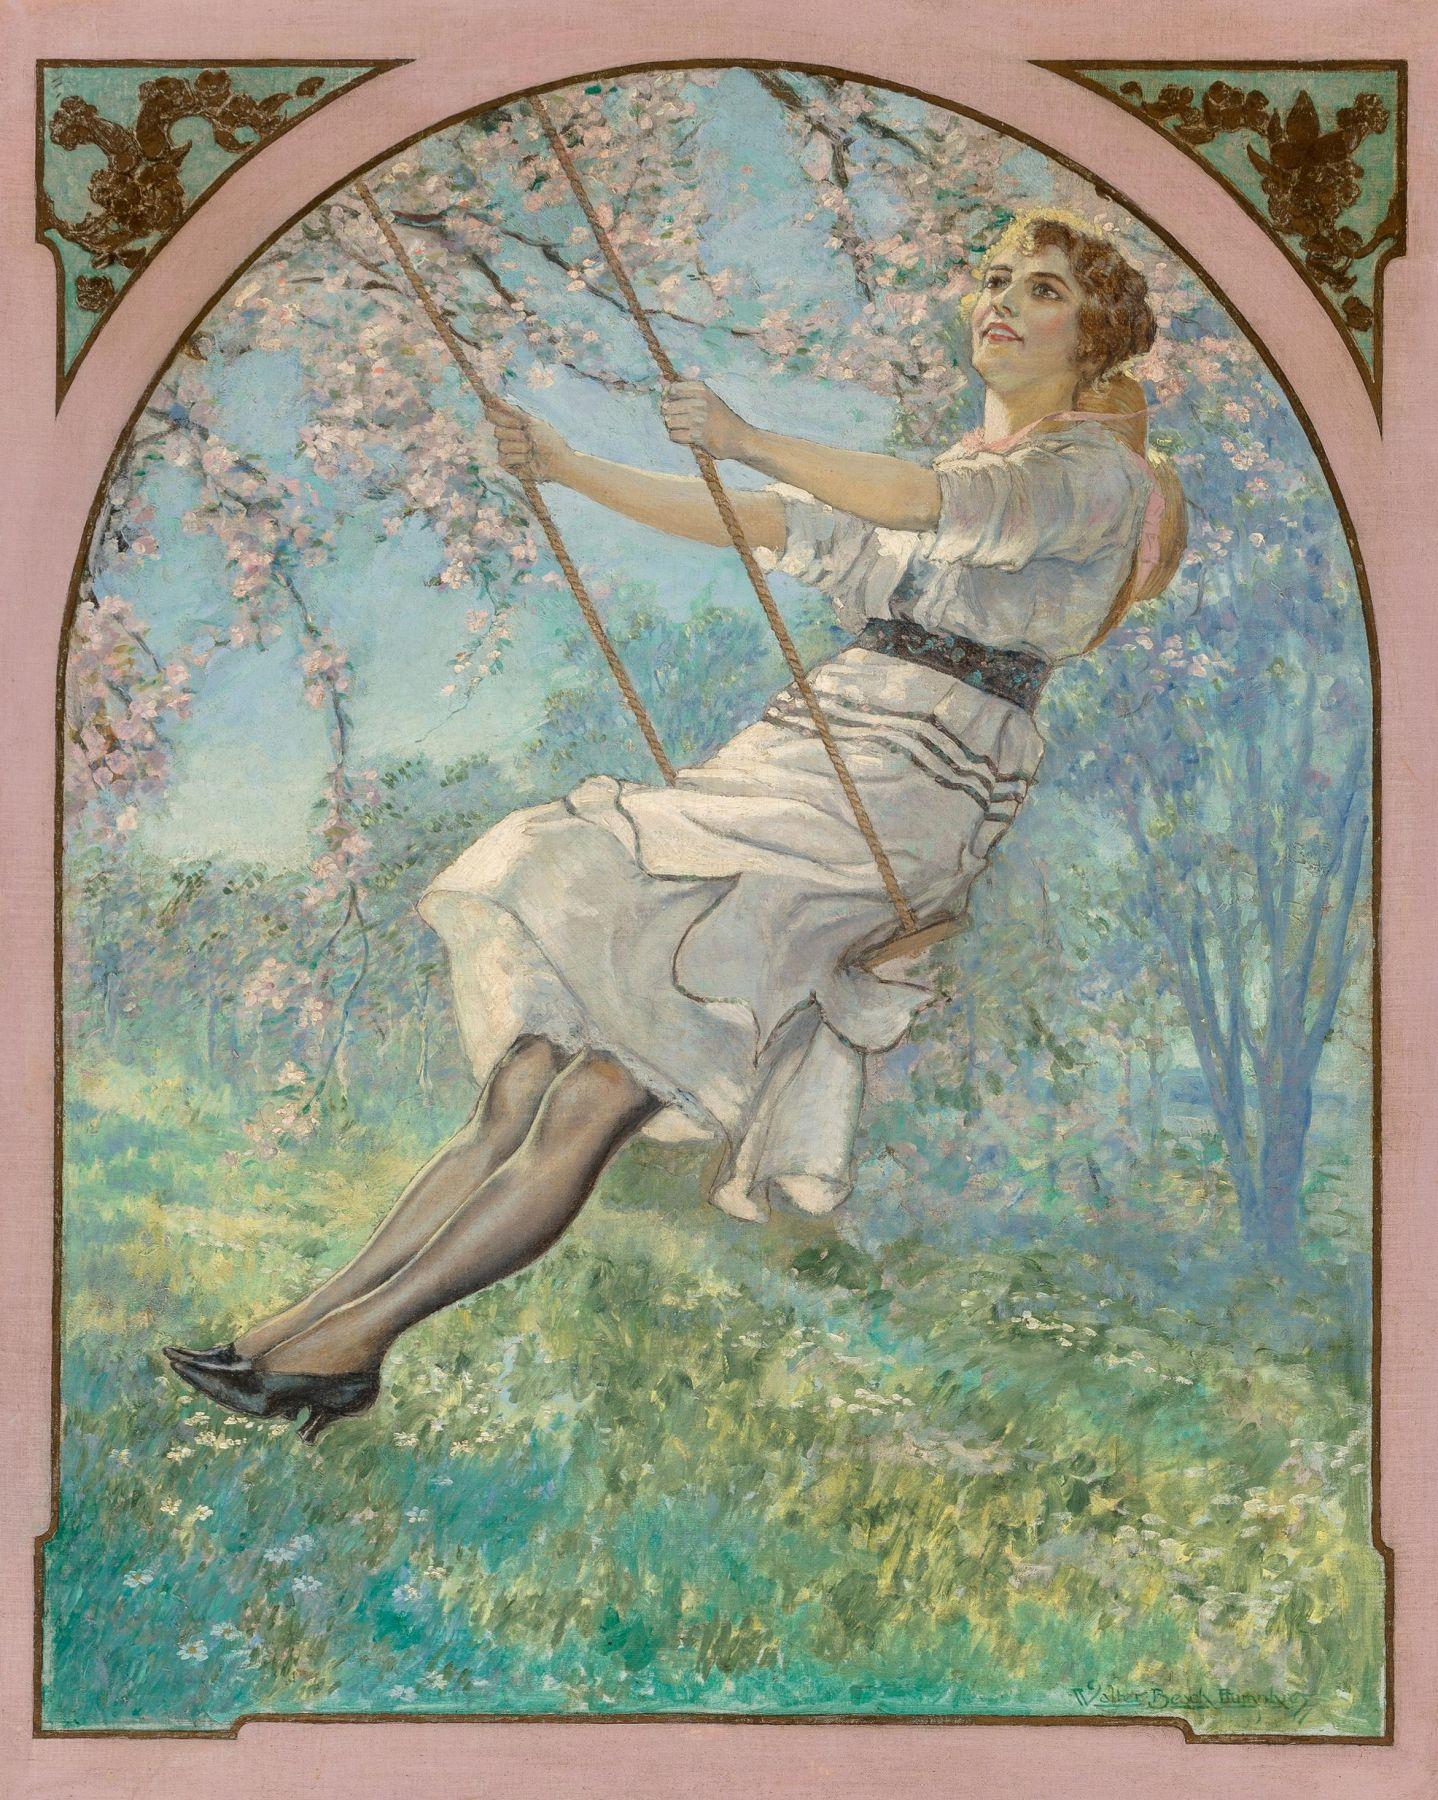 Walter Beach Humphrey Figurative Painting - Lady on Swing